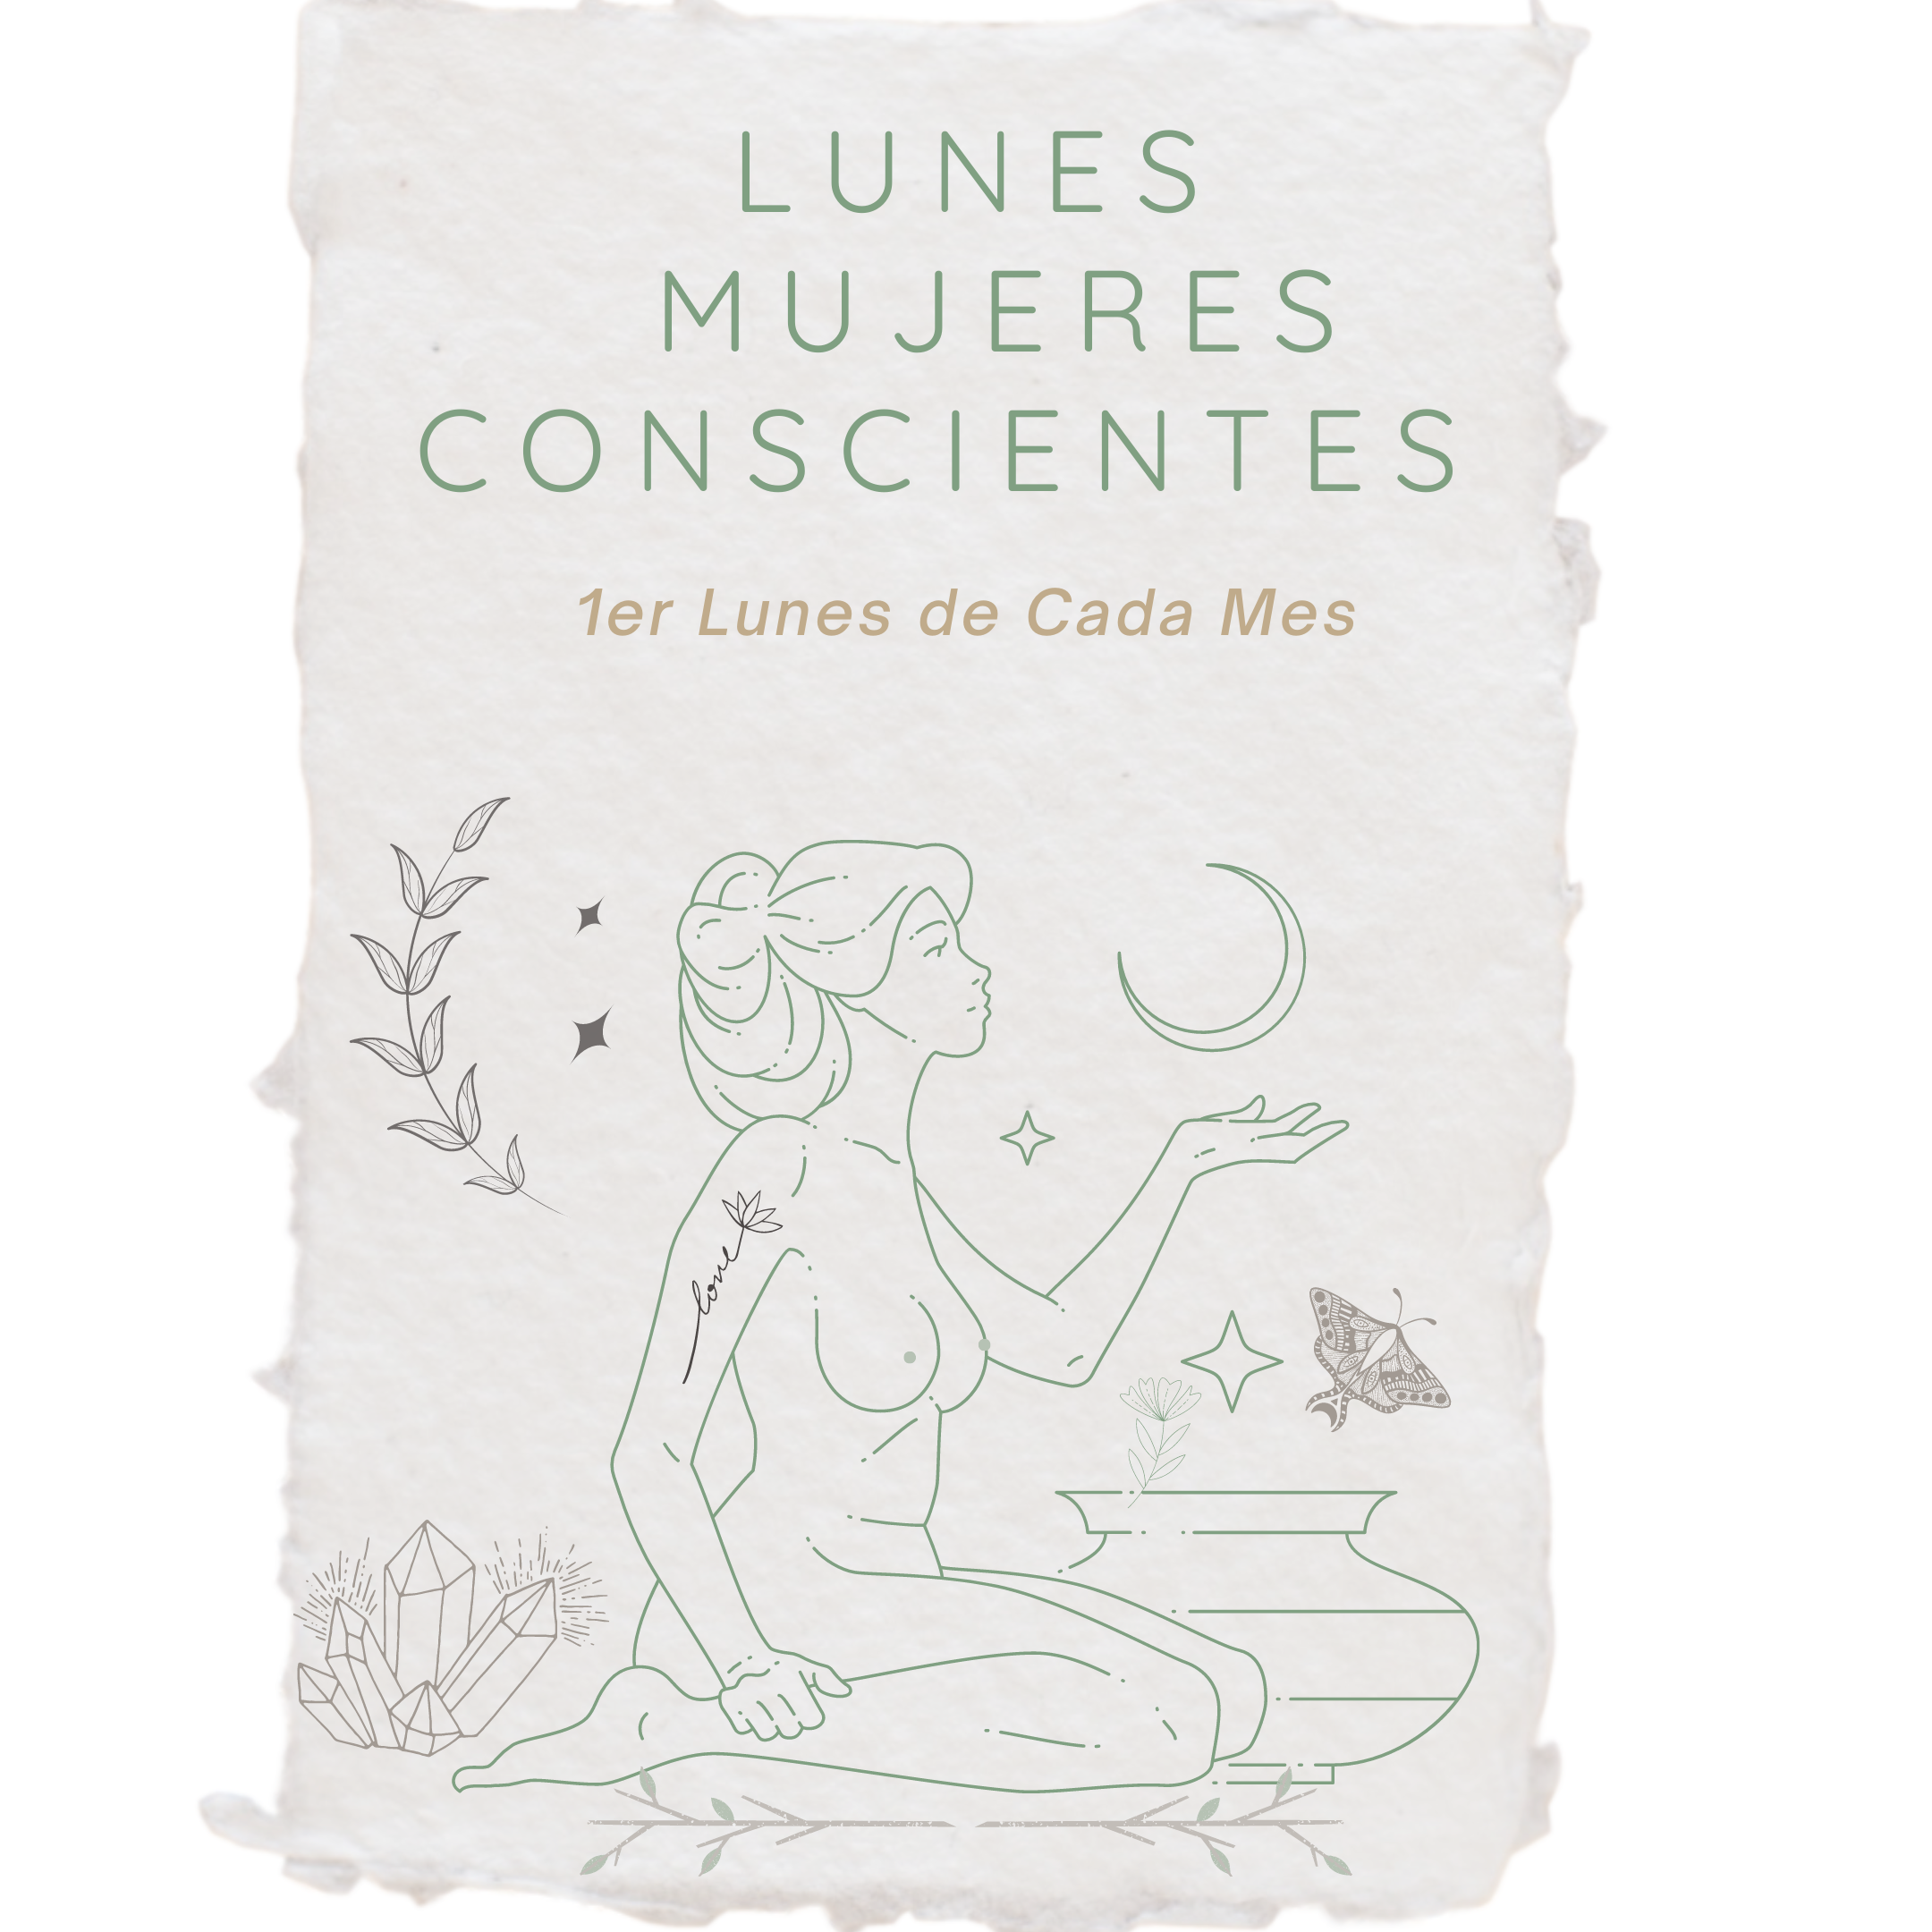 Lunes Mujeres Conscientes Rituales Erika Ramelli (1080 x 822 px)